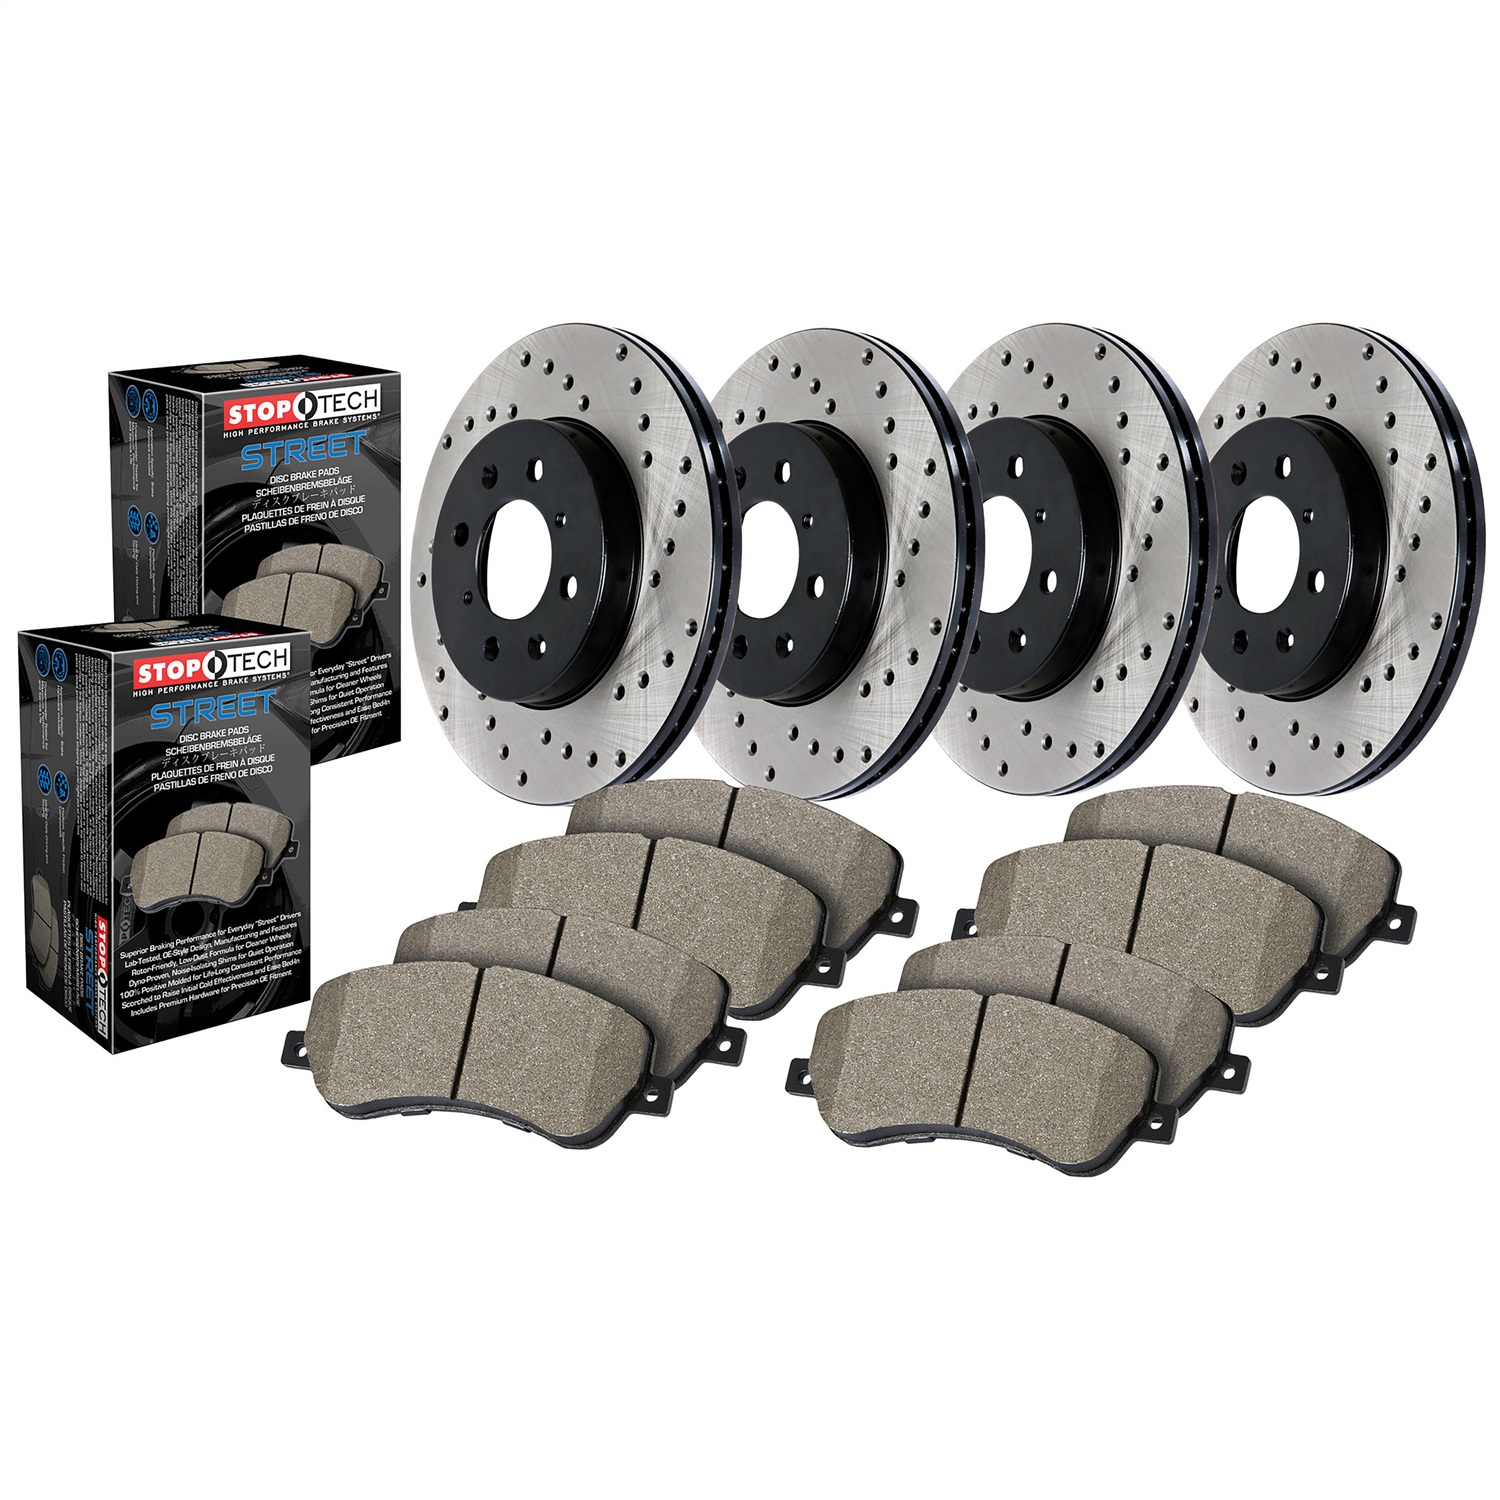 StopTech 936.44122 Street - 4 Wheel Disc Brake Kit w/Cross-Drilled Rotor